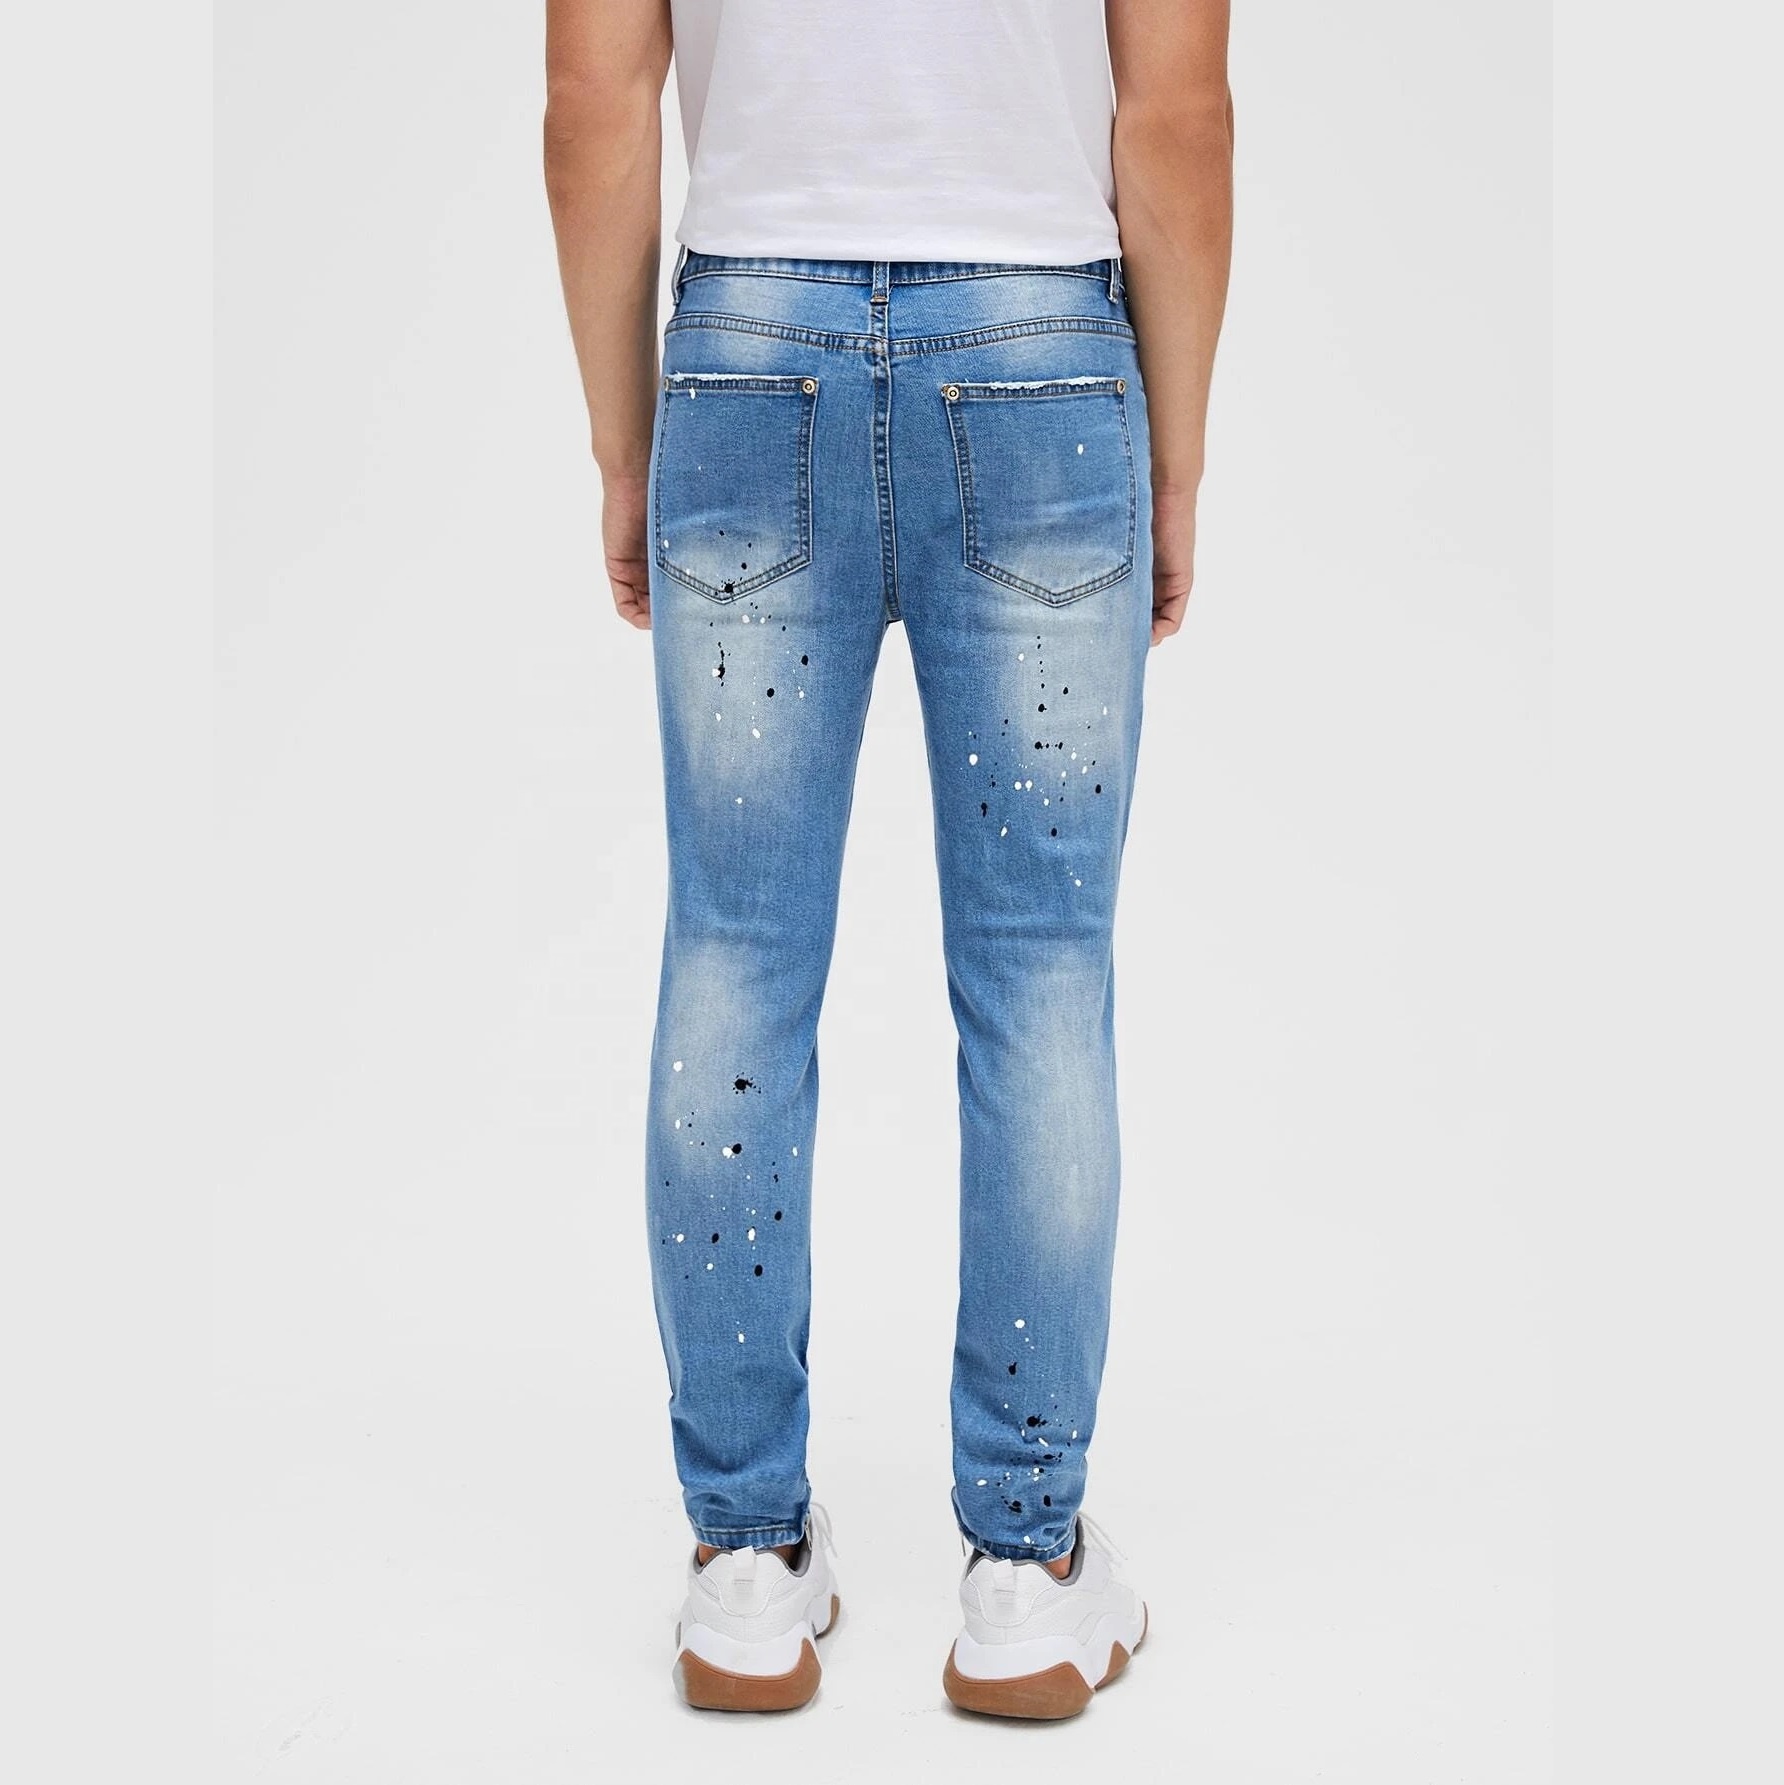 made in China whole sale denim blue jeans for men leg zipper fashion low waist men jeans